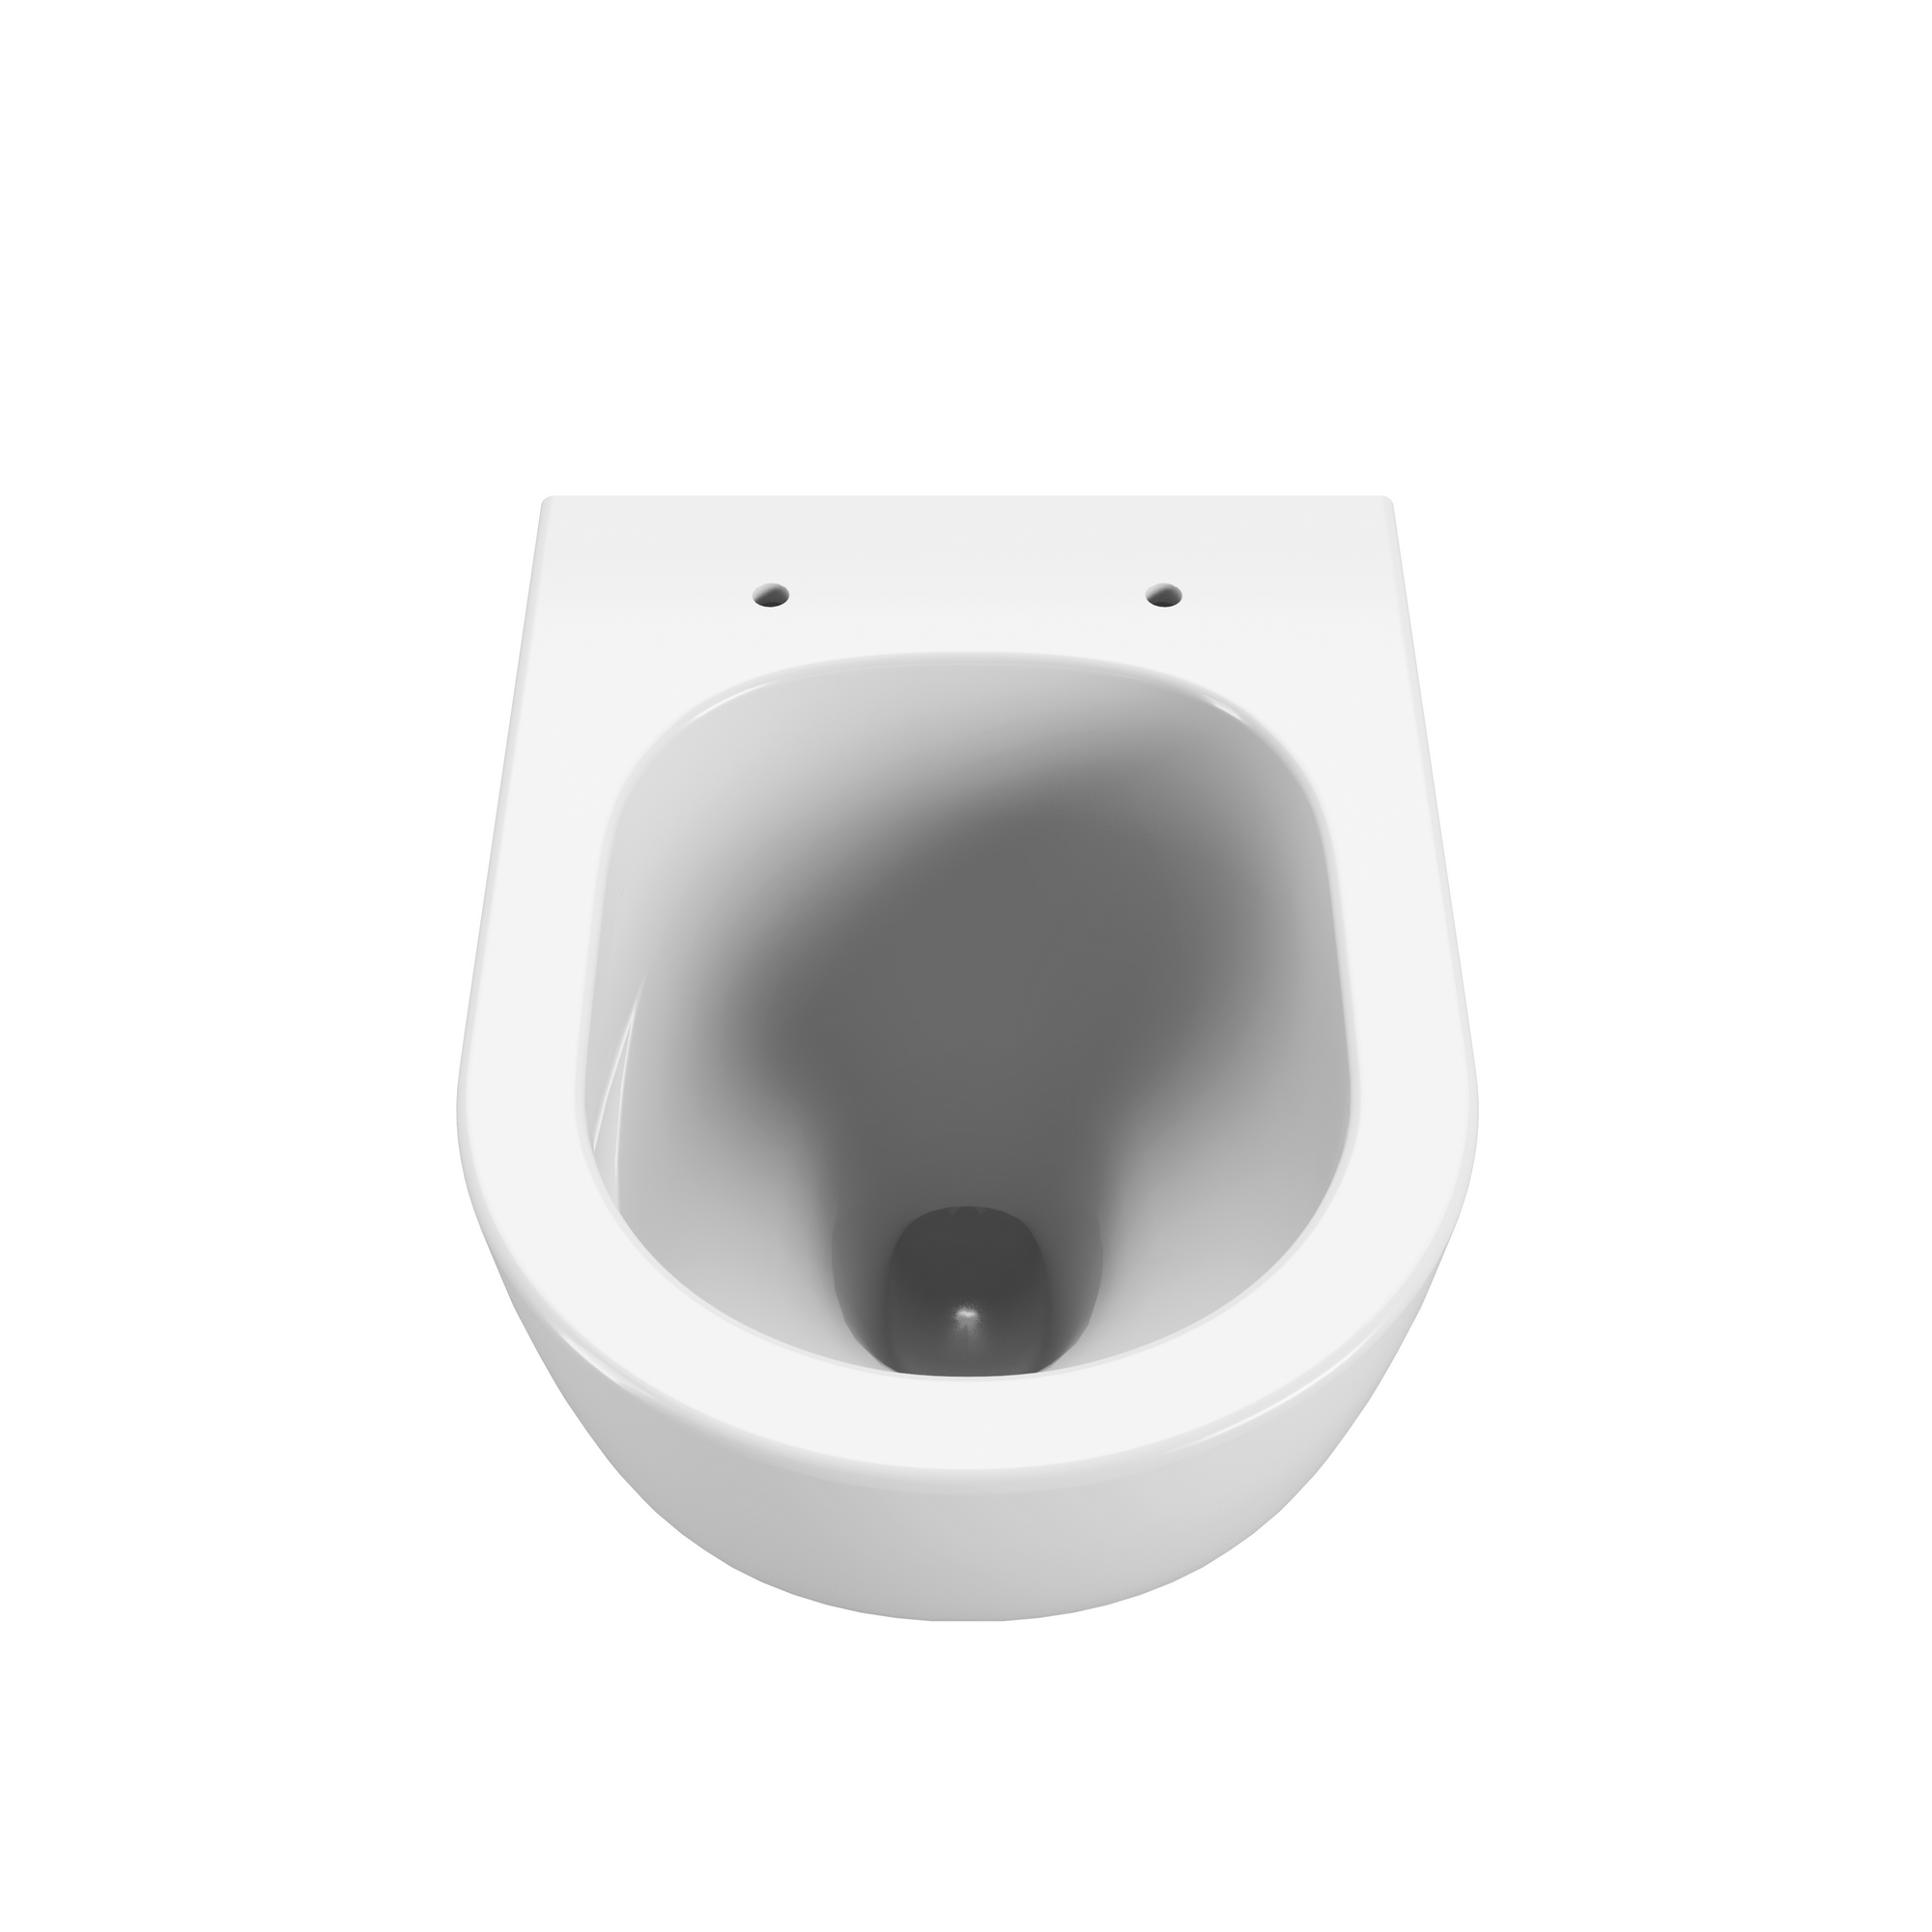 Wand-WC 'Saranda pure rimless' Keramik weiß 50 x 36 x 36 cm + product picture